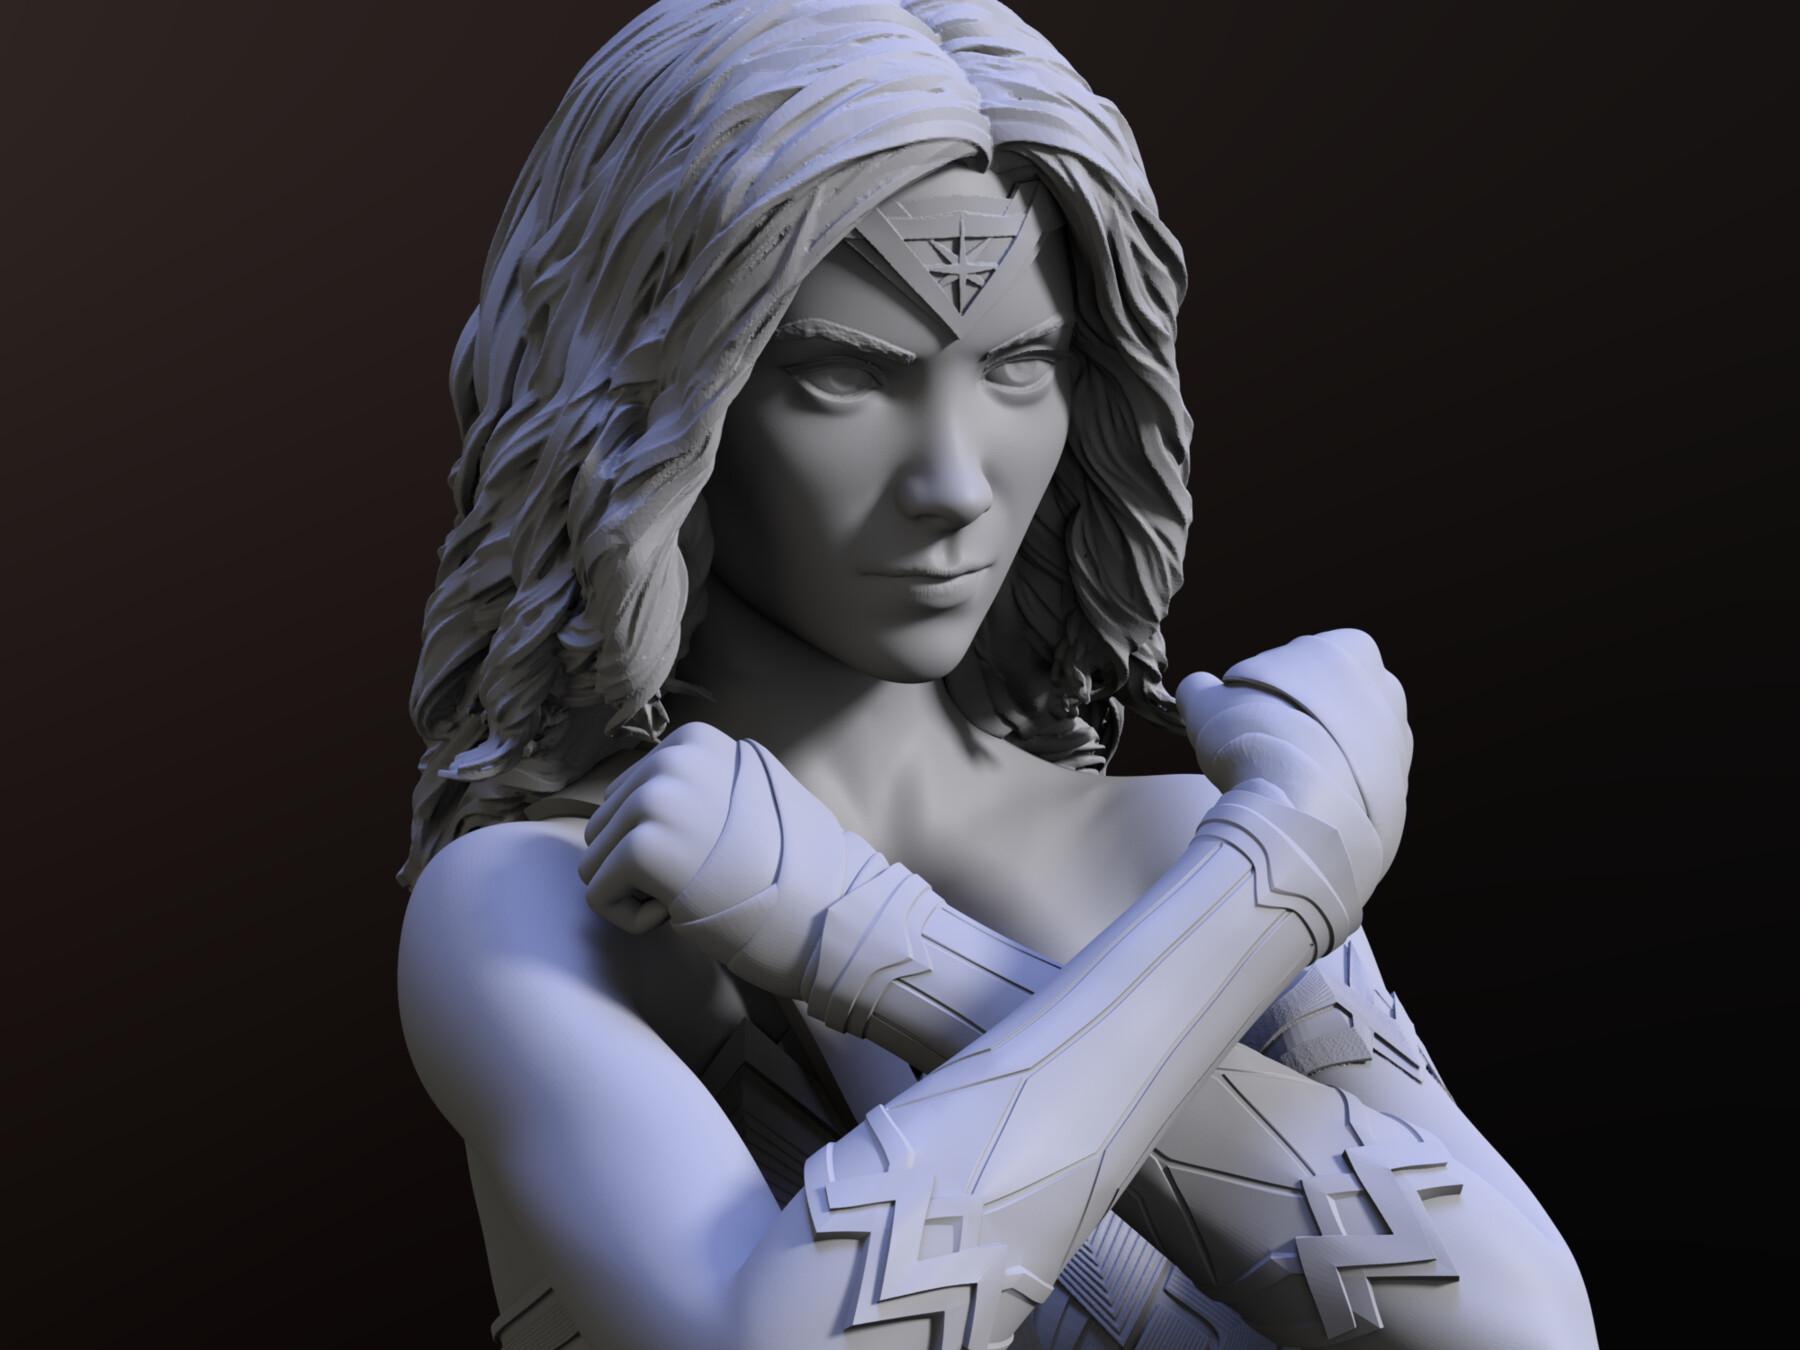 ArtStation - Stylized Wonder Woman Game Model